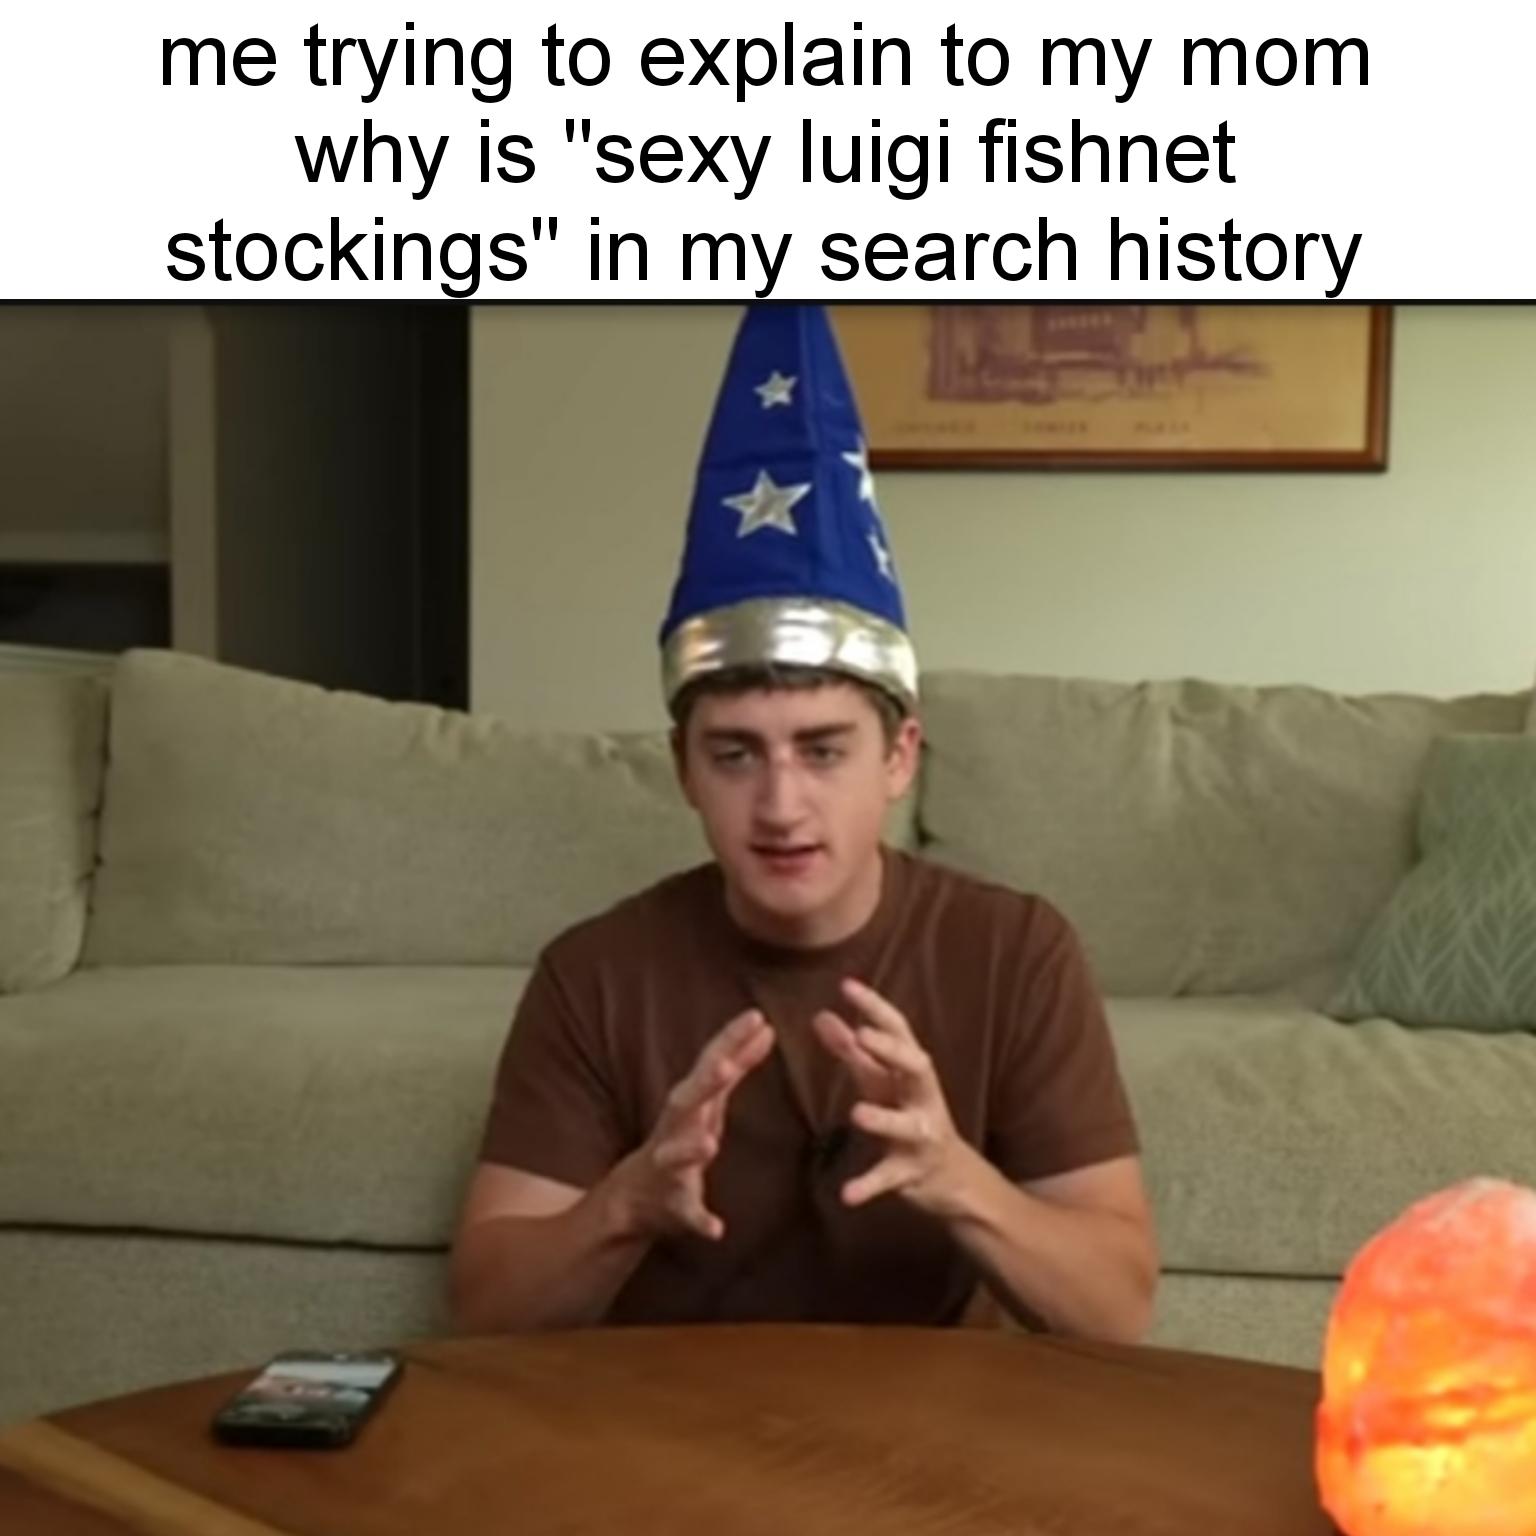 funny memes and pics - ochrona własności intelektualnej - me trying to explain to my mom why is "sexy luigi fishnet stockings" in my search history